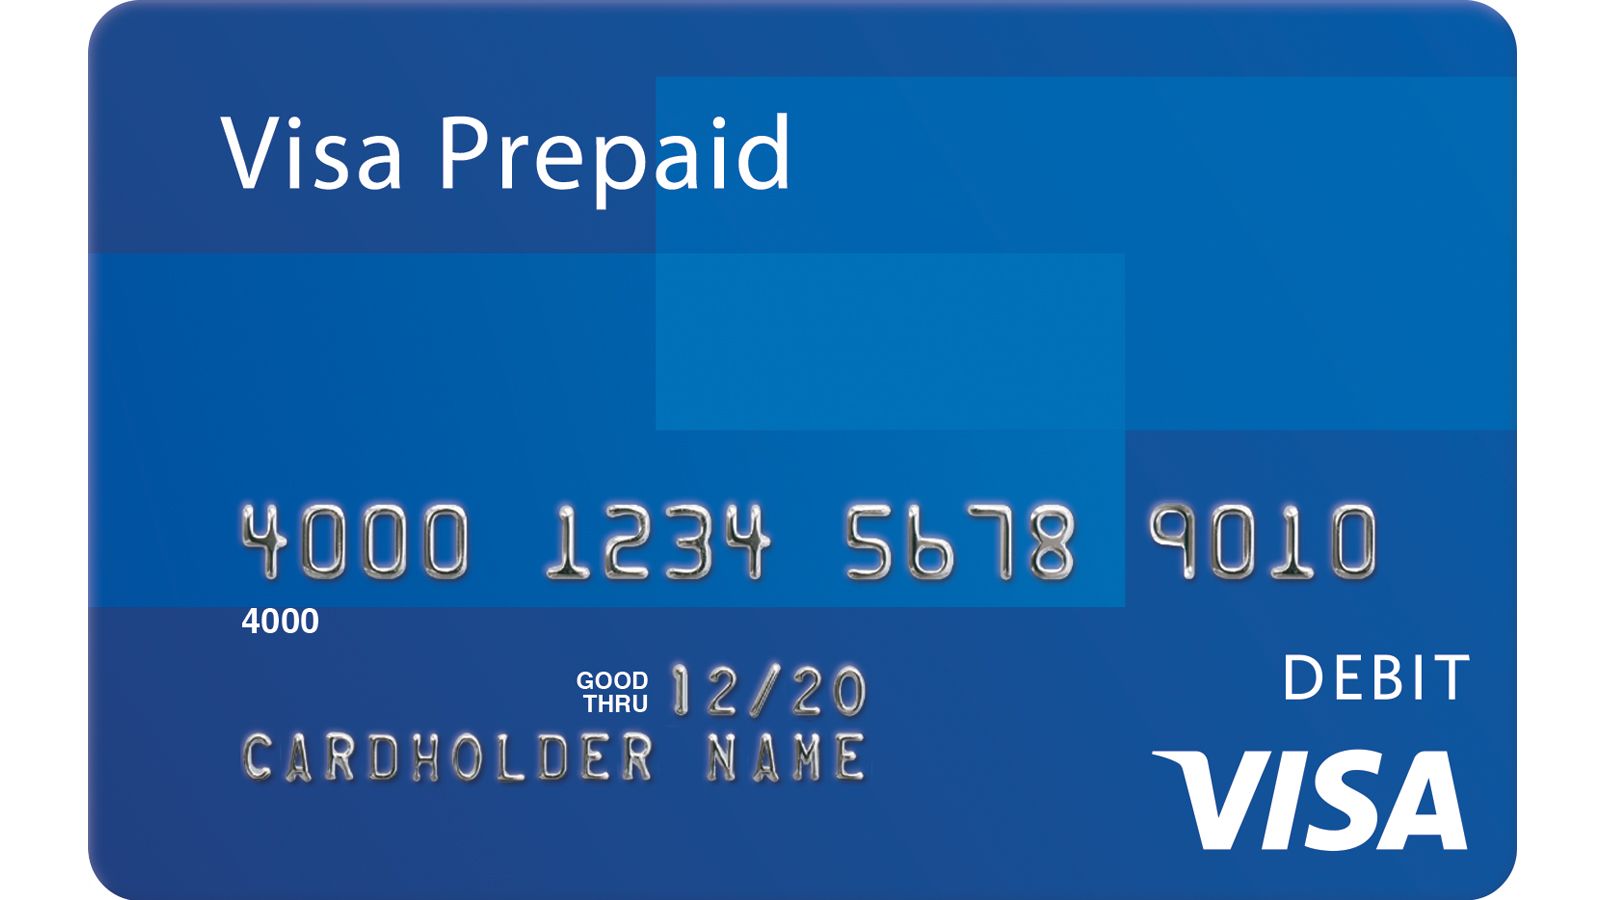 Visa kr. Visa prepaid Card. Карточка виза. Предоплаченные карты. Предоплаченные банковские карты.